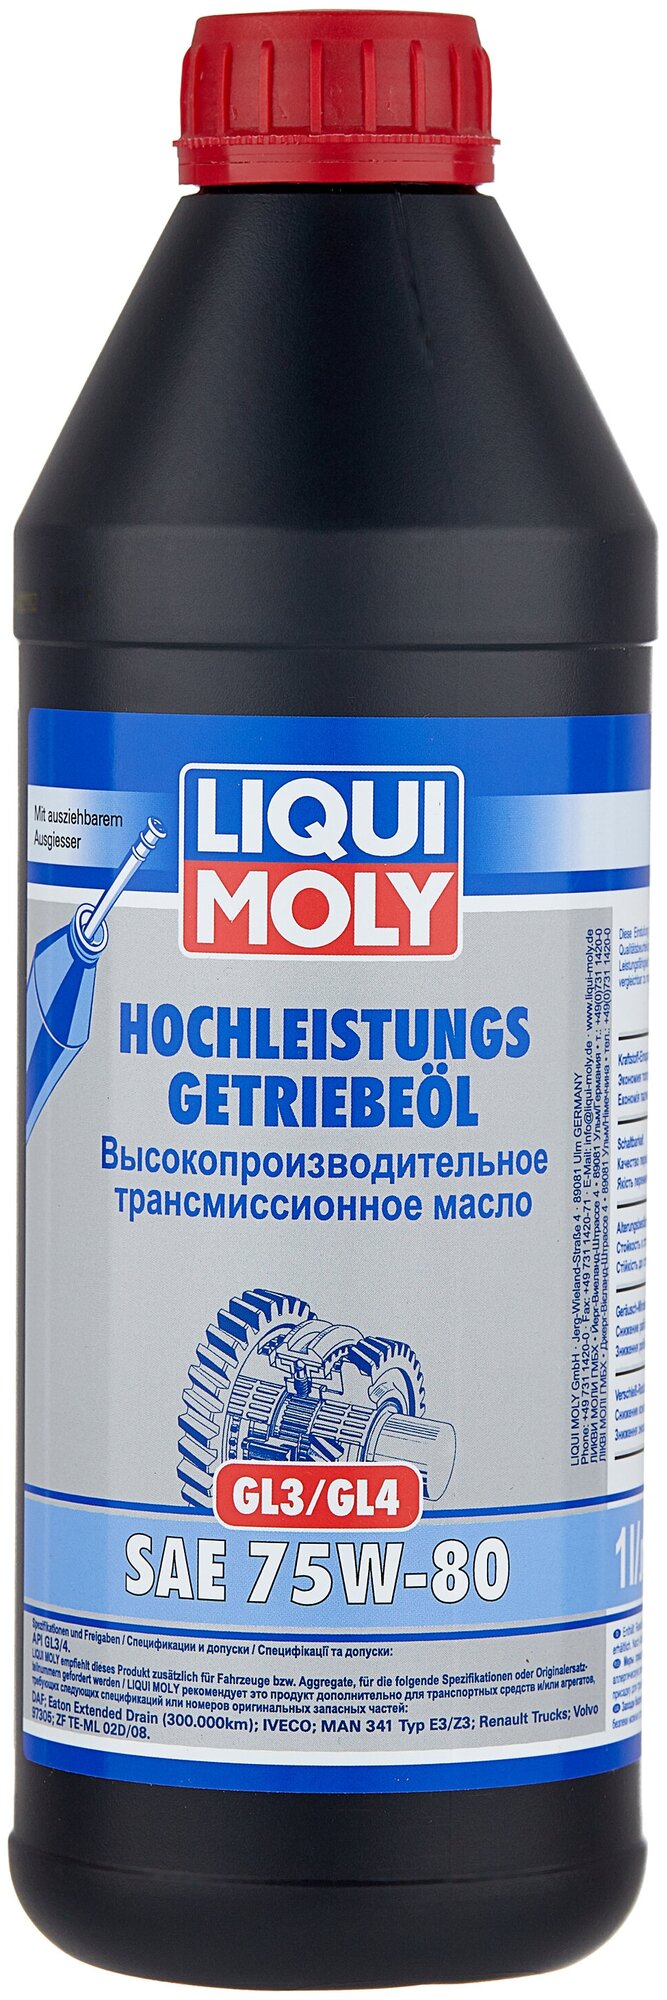 Liquimoly 75w80 Hochleistungs-Getriebeoil (1l)_масло Трансмис! Синтapi Gl-3/Gl-4: Mb 235.4/235.10 Liqui moly арт. 7584